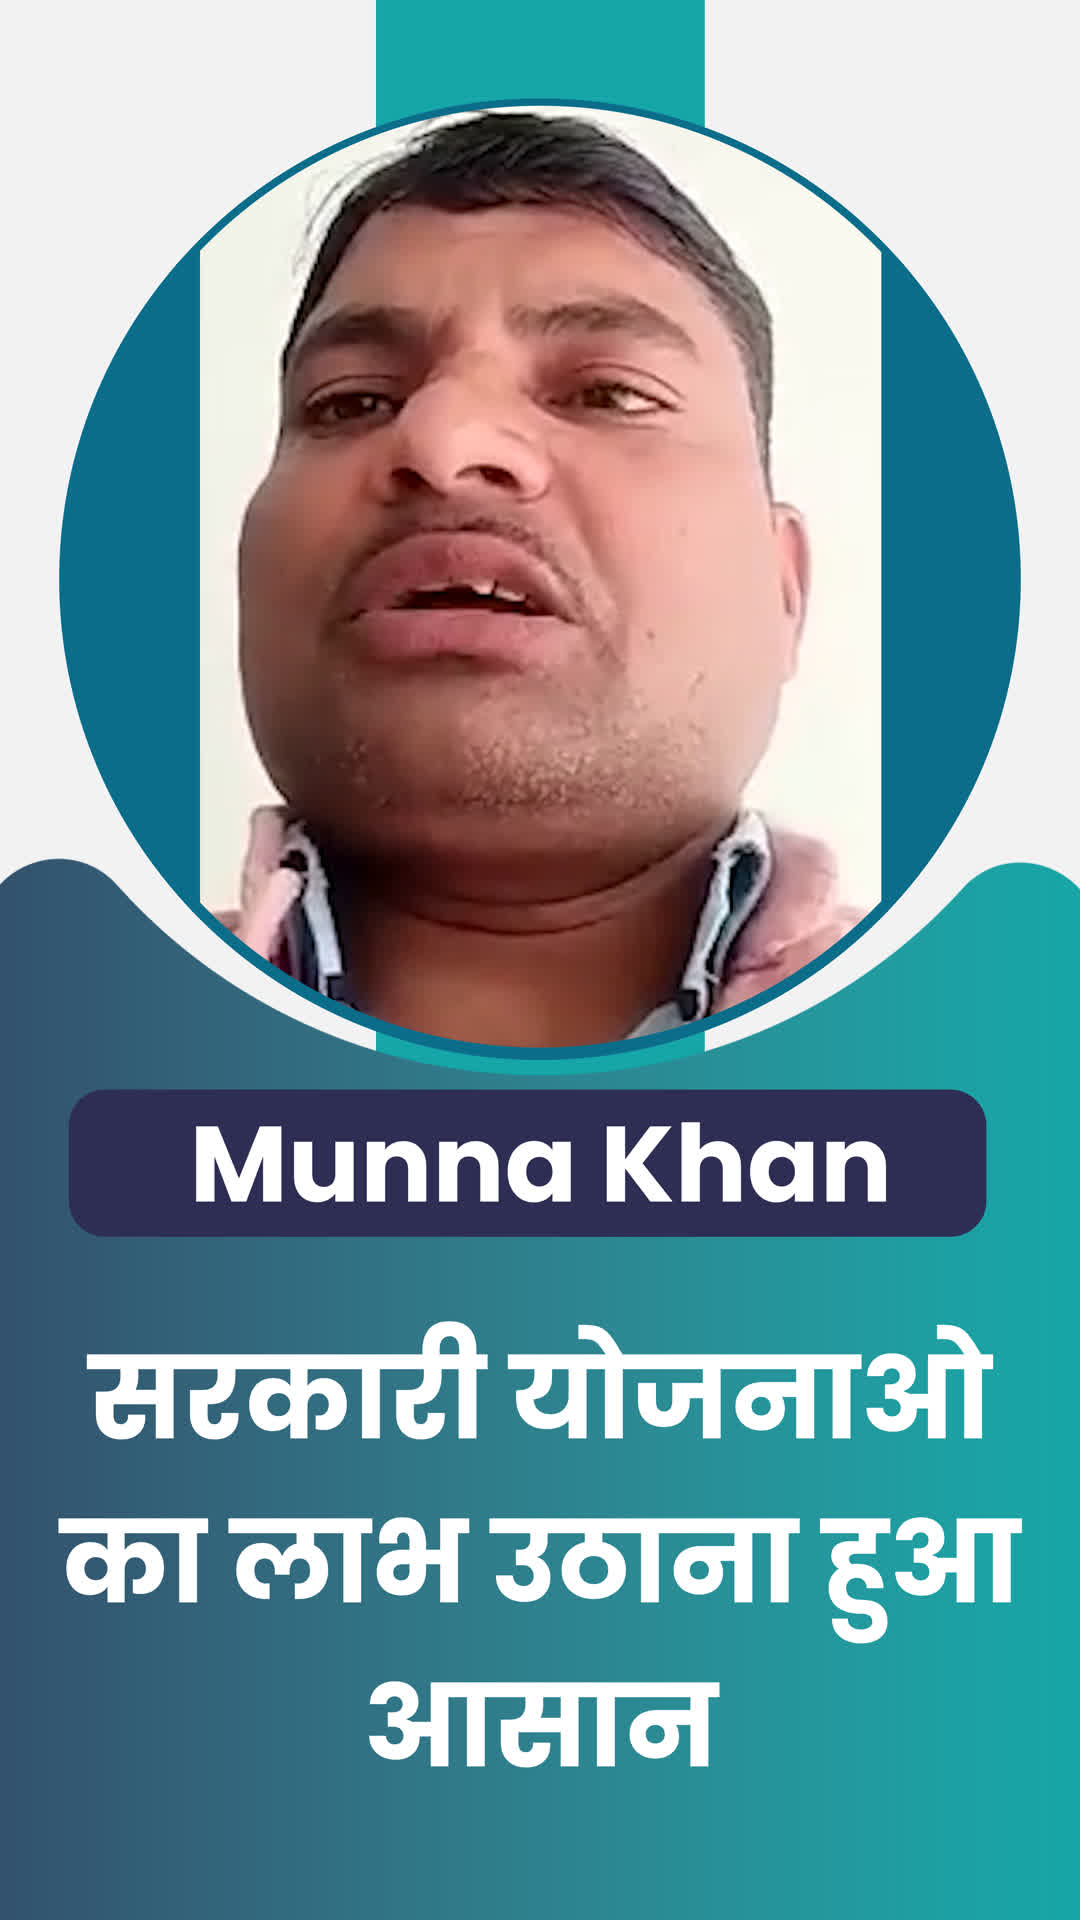 Munna khan 's Honest Review of ffreedom app - Hamirpur - UP ,Uttar Pradesh